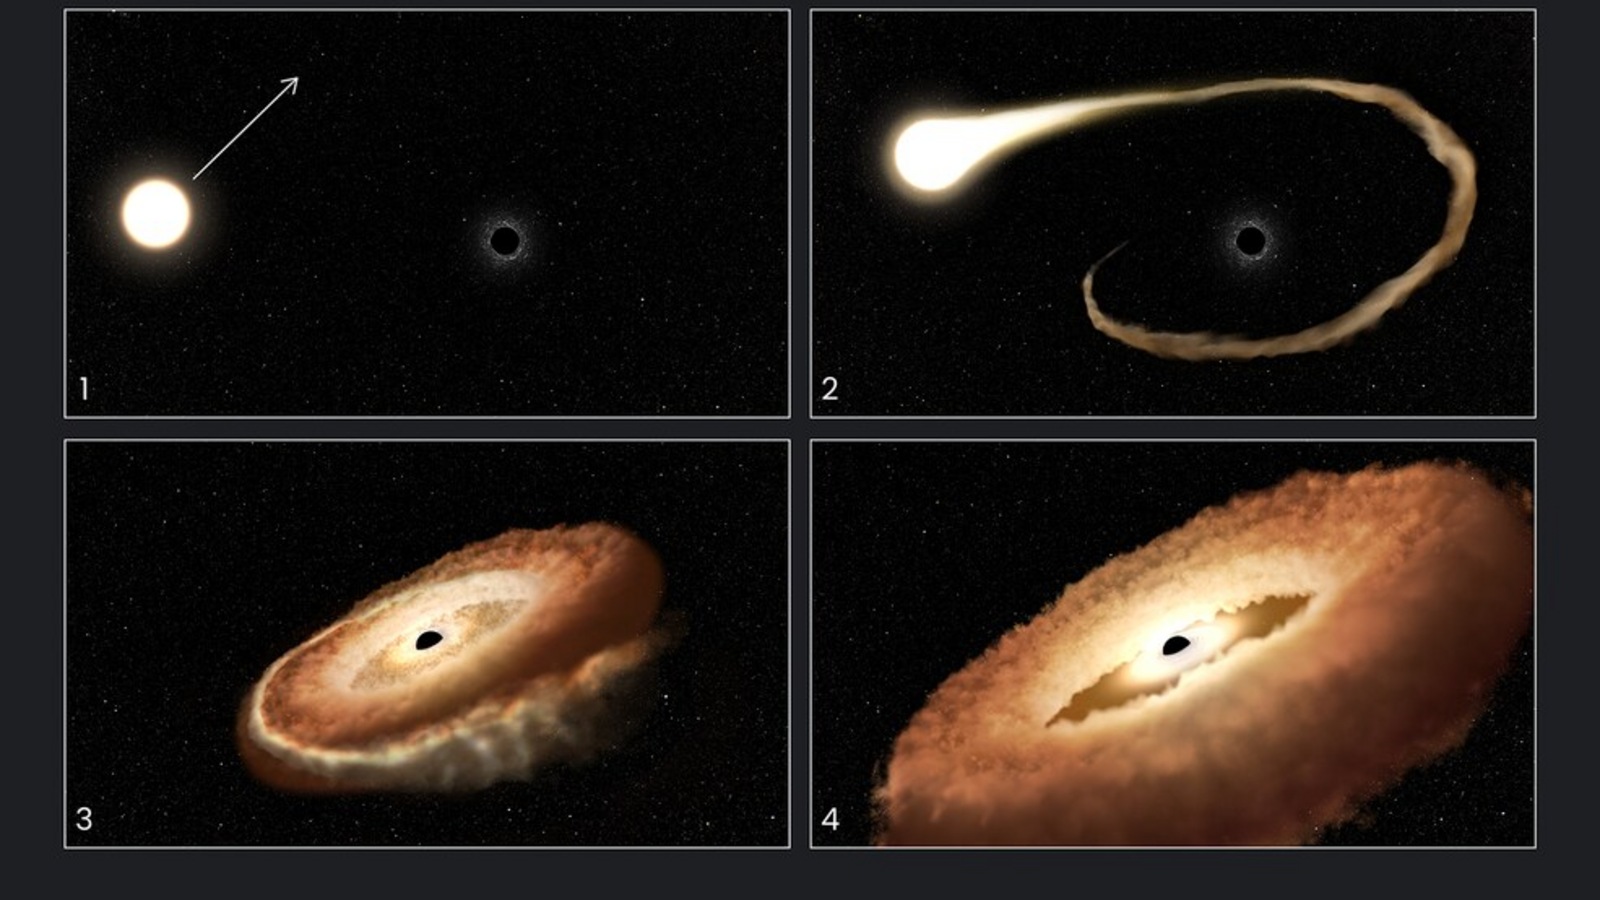 Black hole wandering Milky Way galaxy spied by Hubble